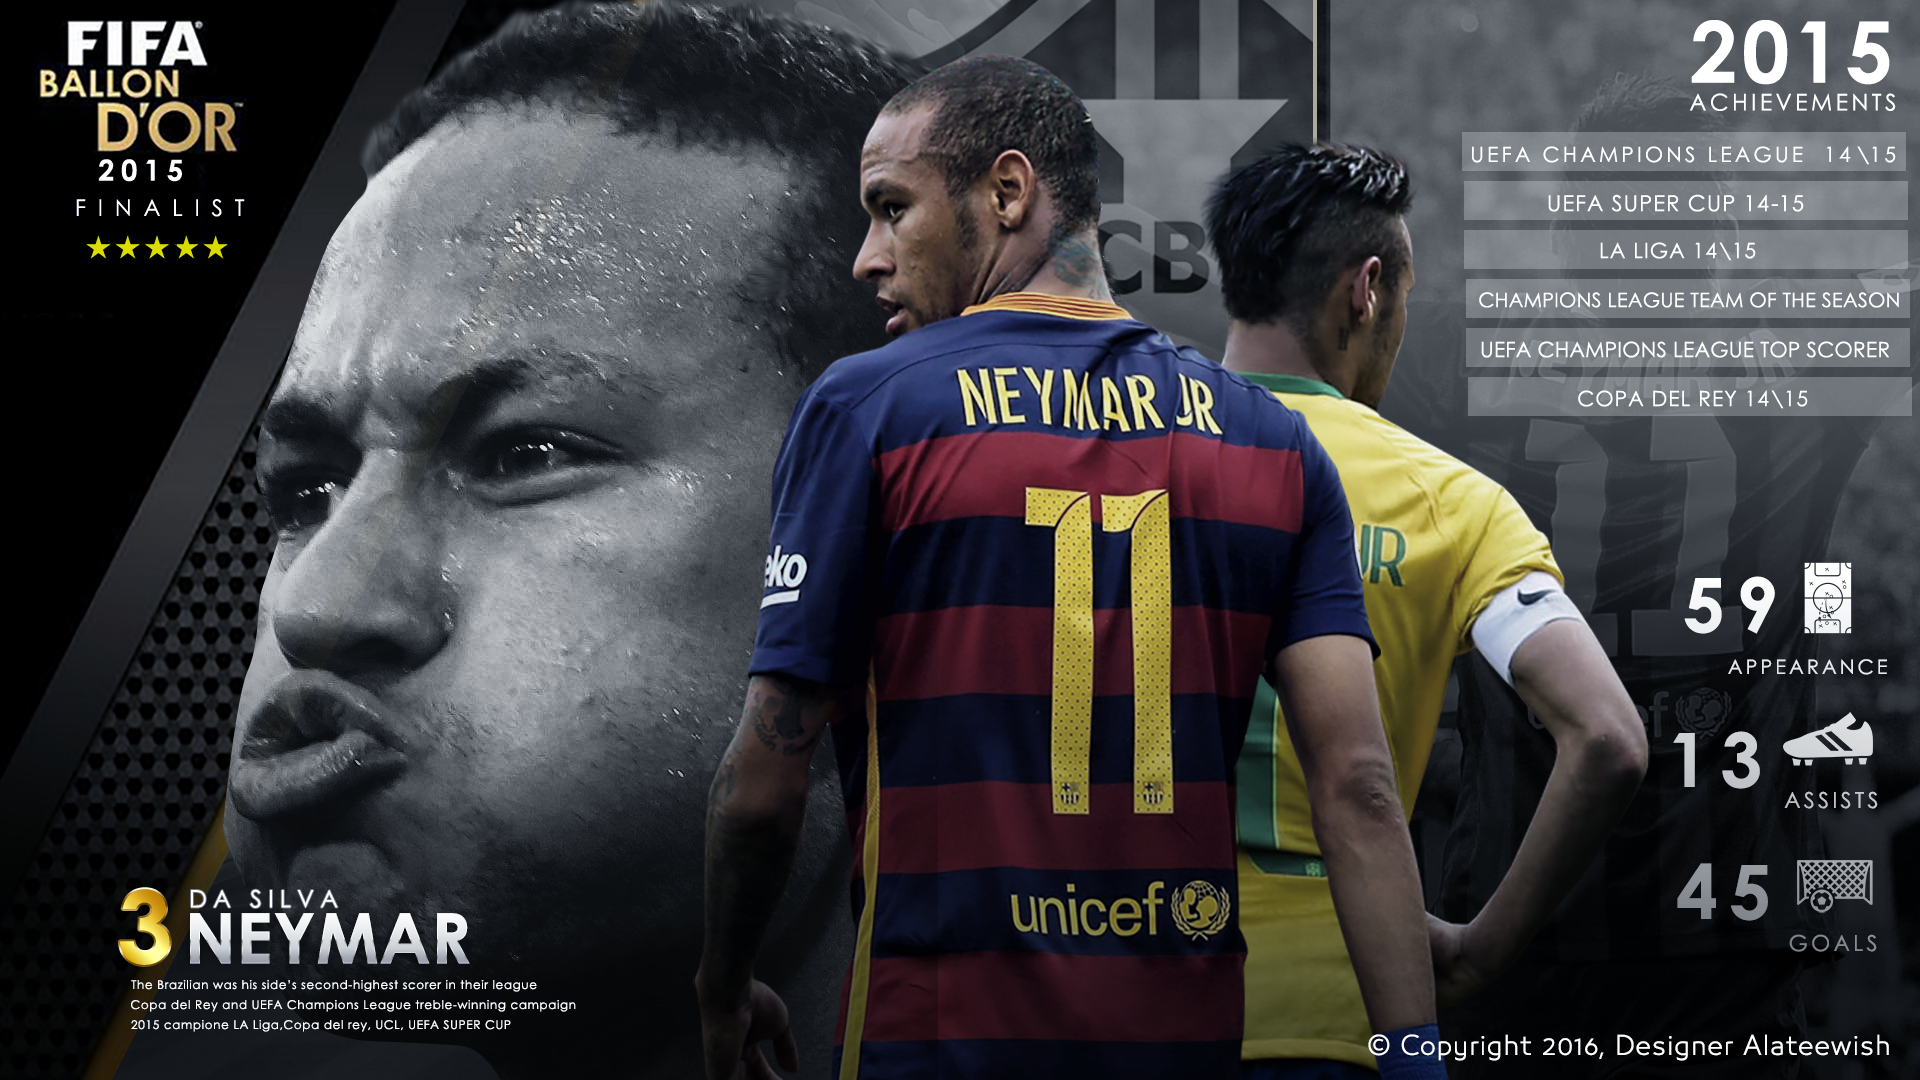 Fifa Ballon D Or Finalist Neymar Jr By Designer